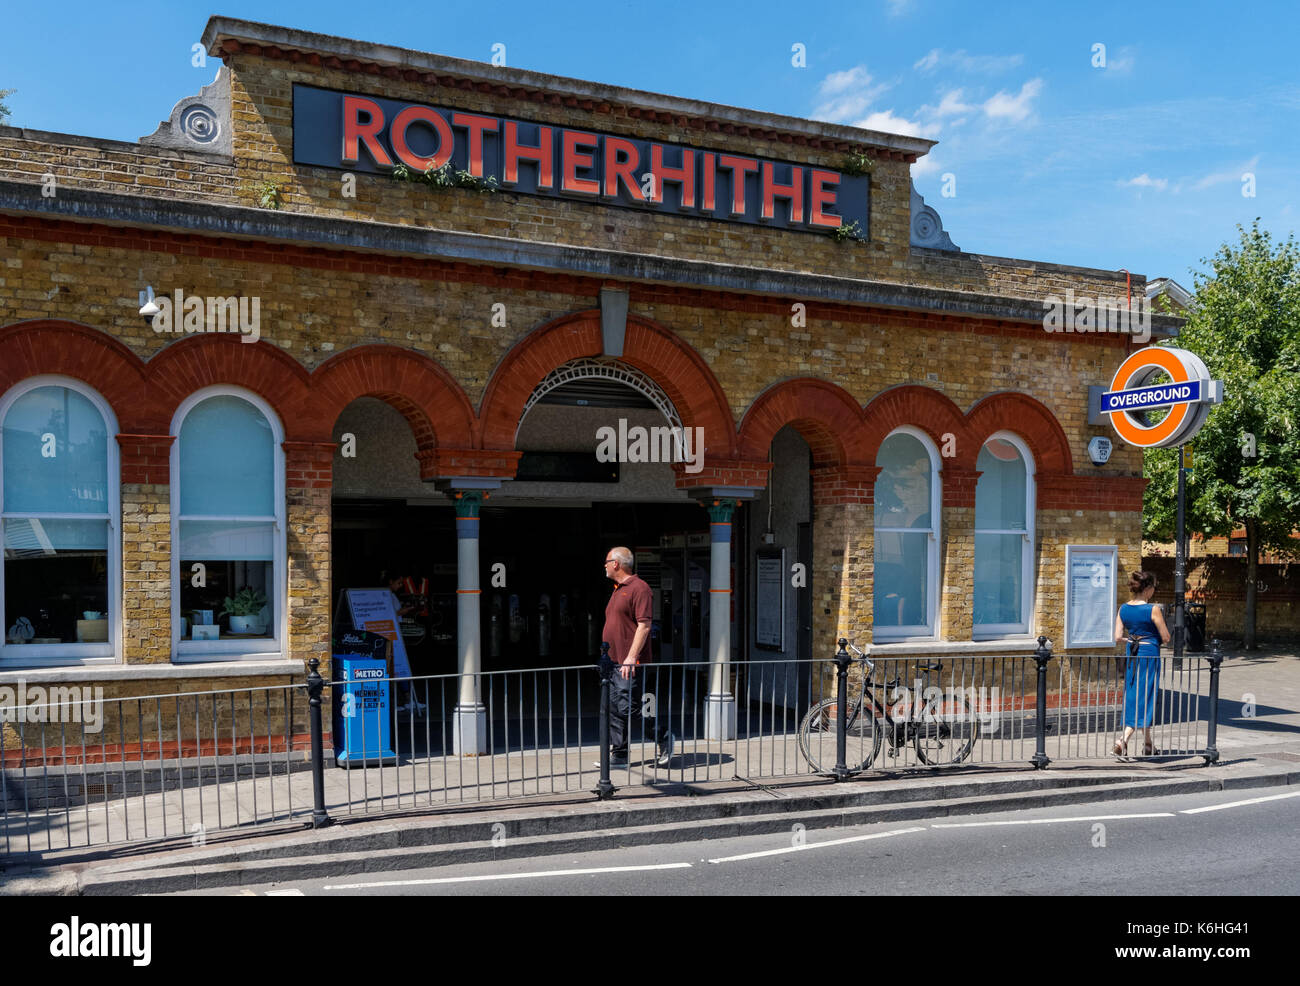 Entrée à Rotherhithe Station Ferroviaire et Overground, Londres, Angleterre, Royaume-Uni, UK Banque D'Images